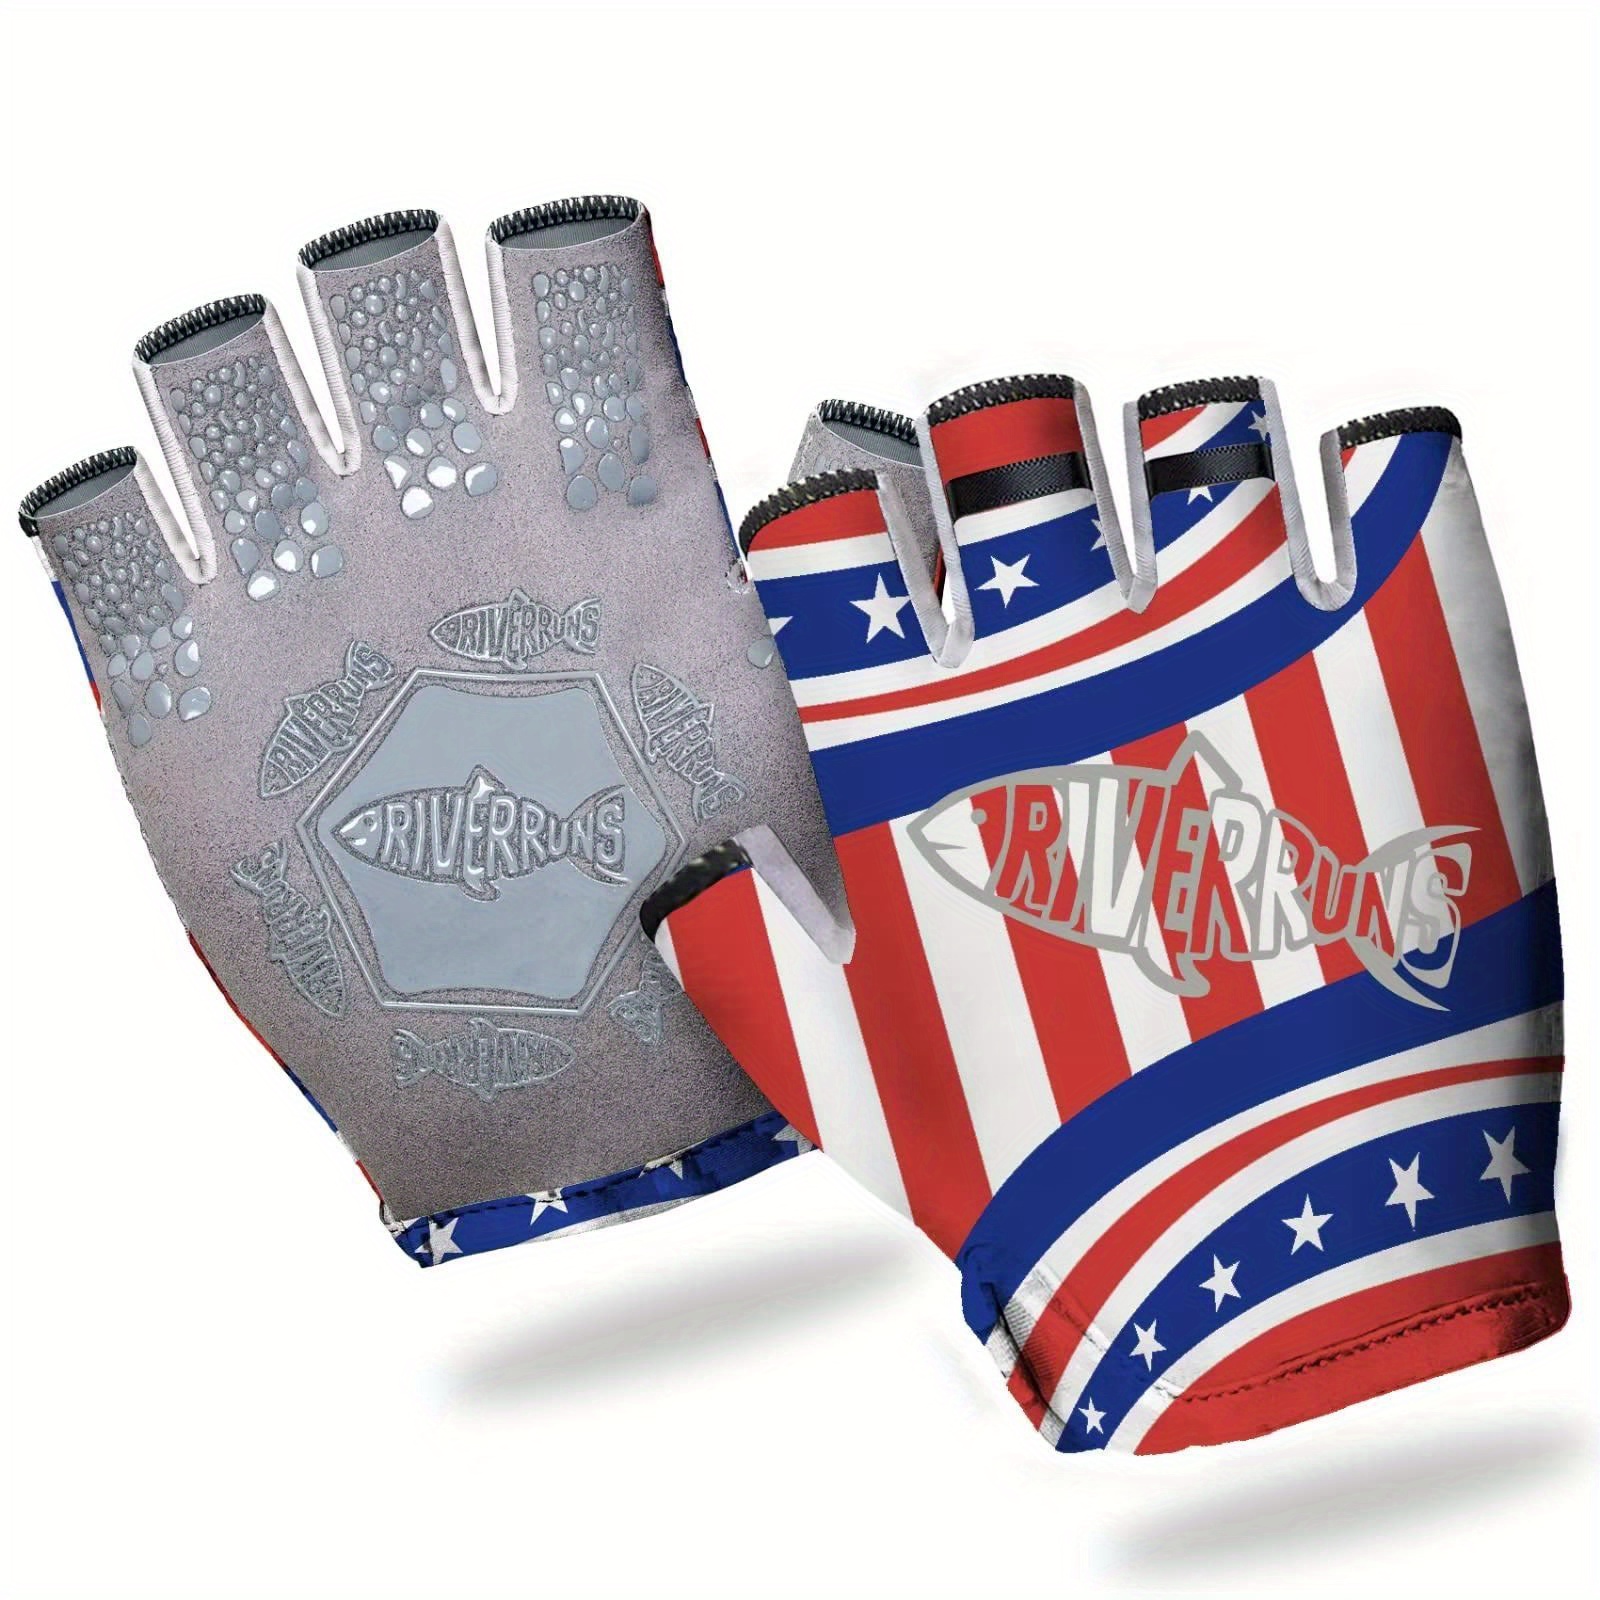 2-Pack Berkley Universal Fishing Durable Gloves